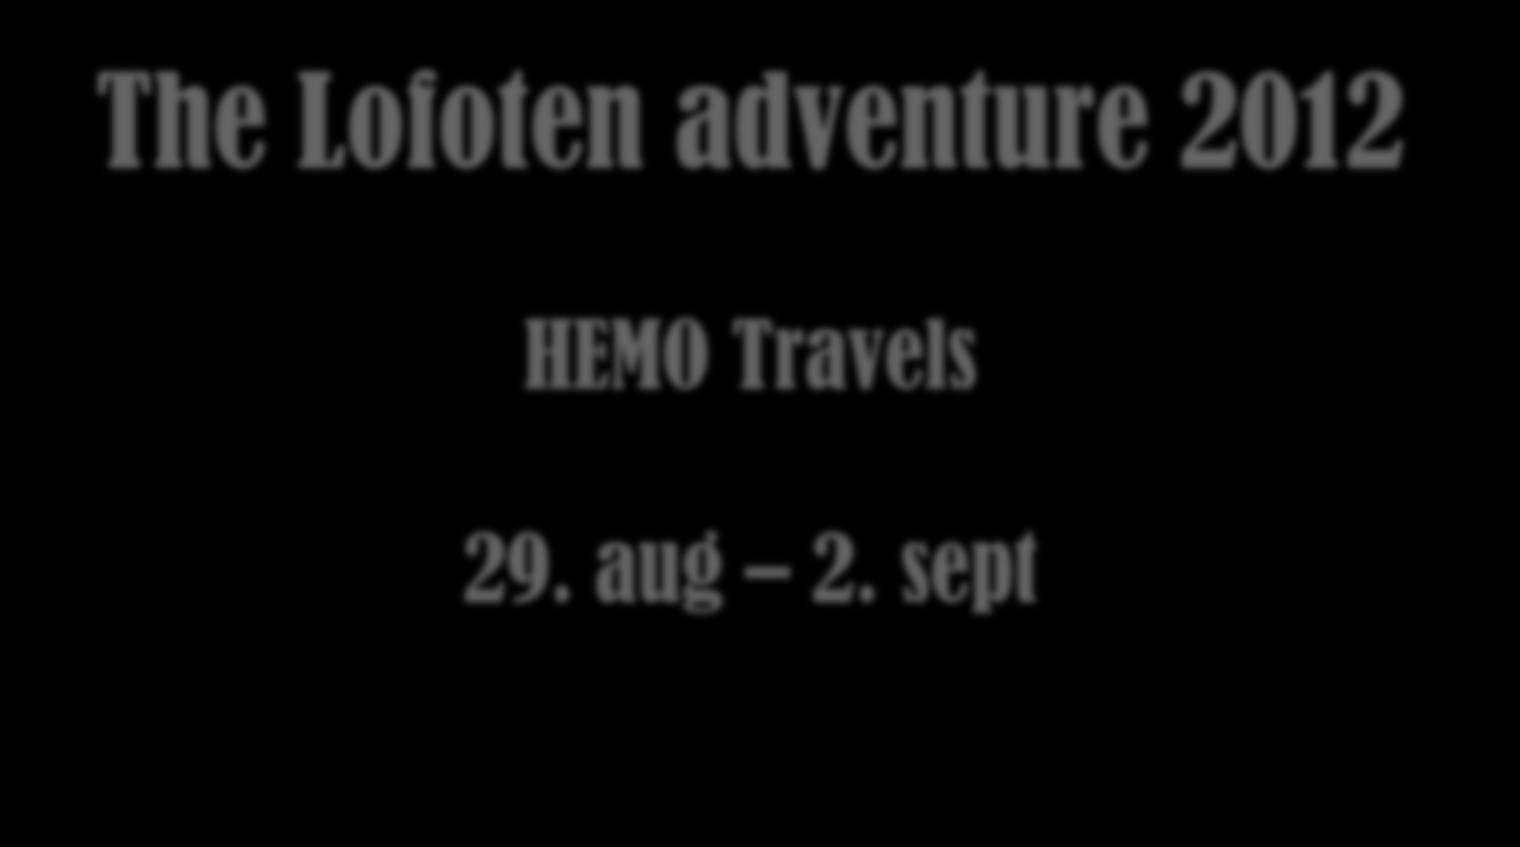 The Lofoten adventure 2012